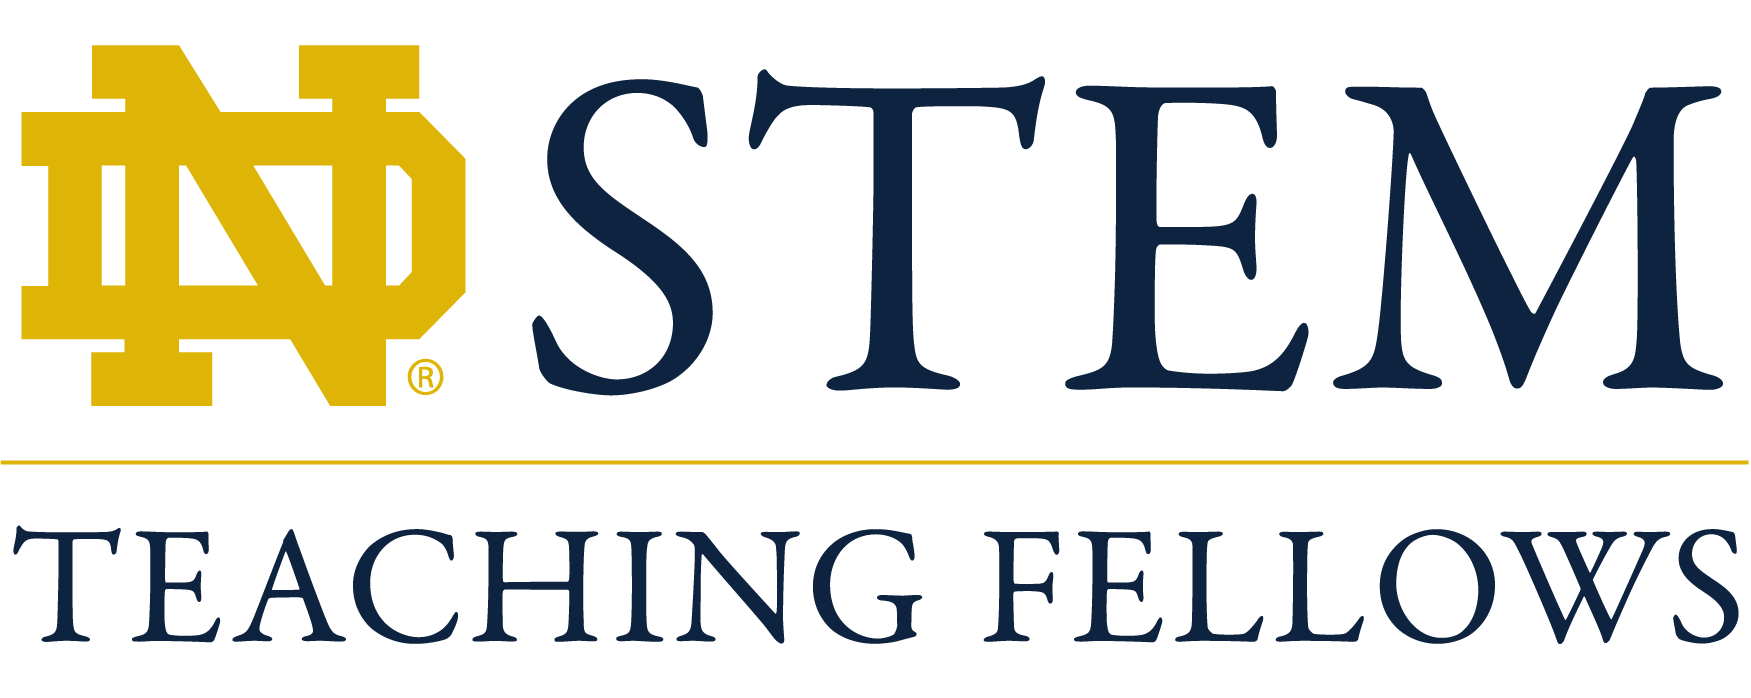 STEM Teaching Fellows Logo white letters gold ND